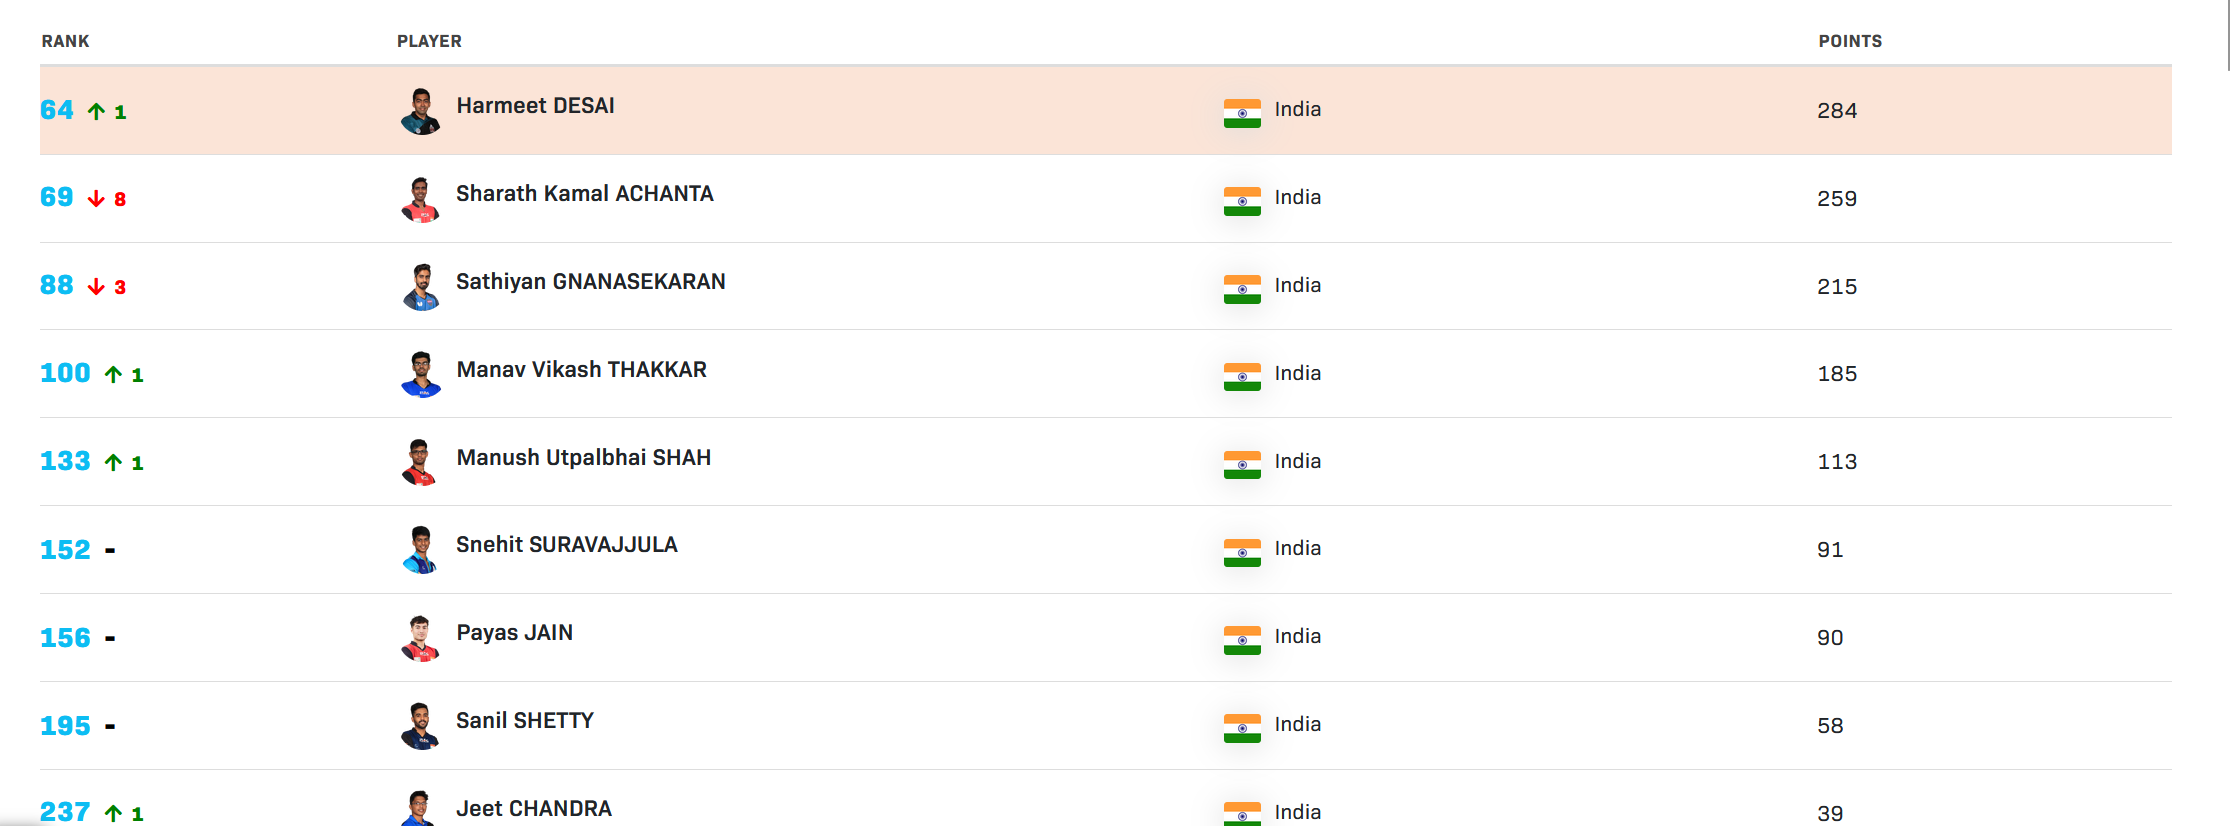 Harmeet Desai becomes highest ranked Indian, source WTT website